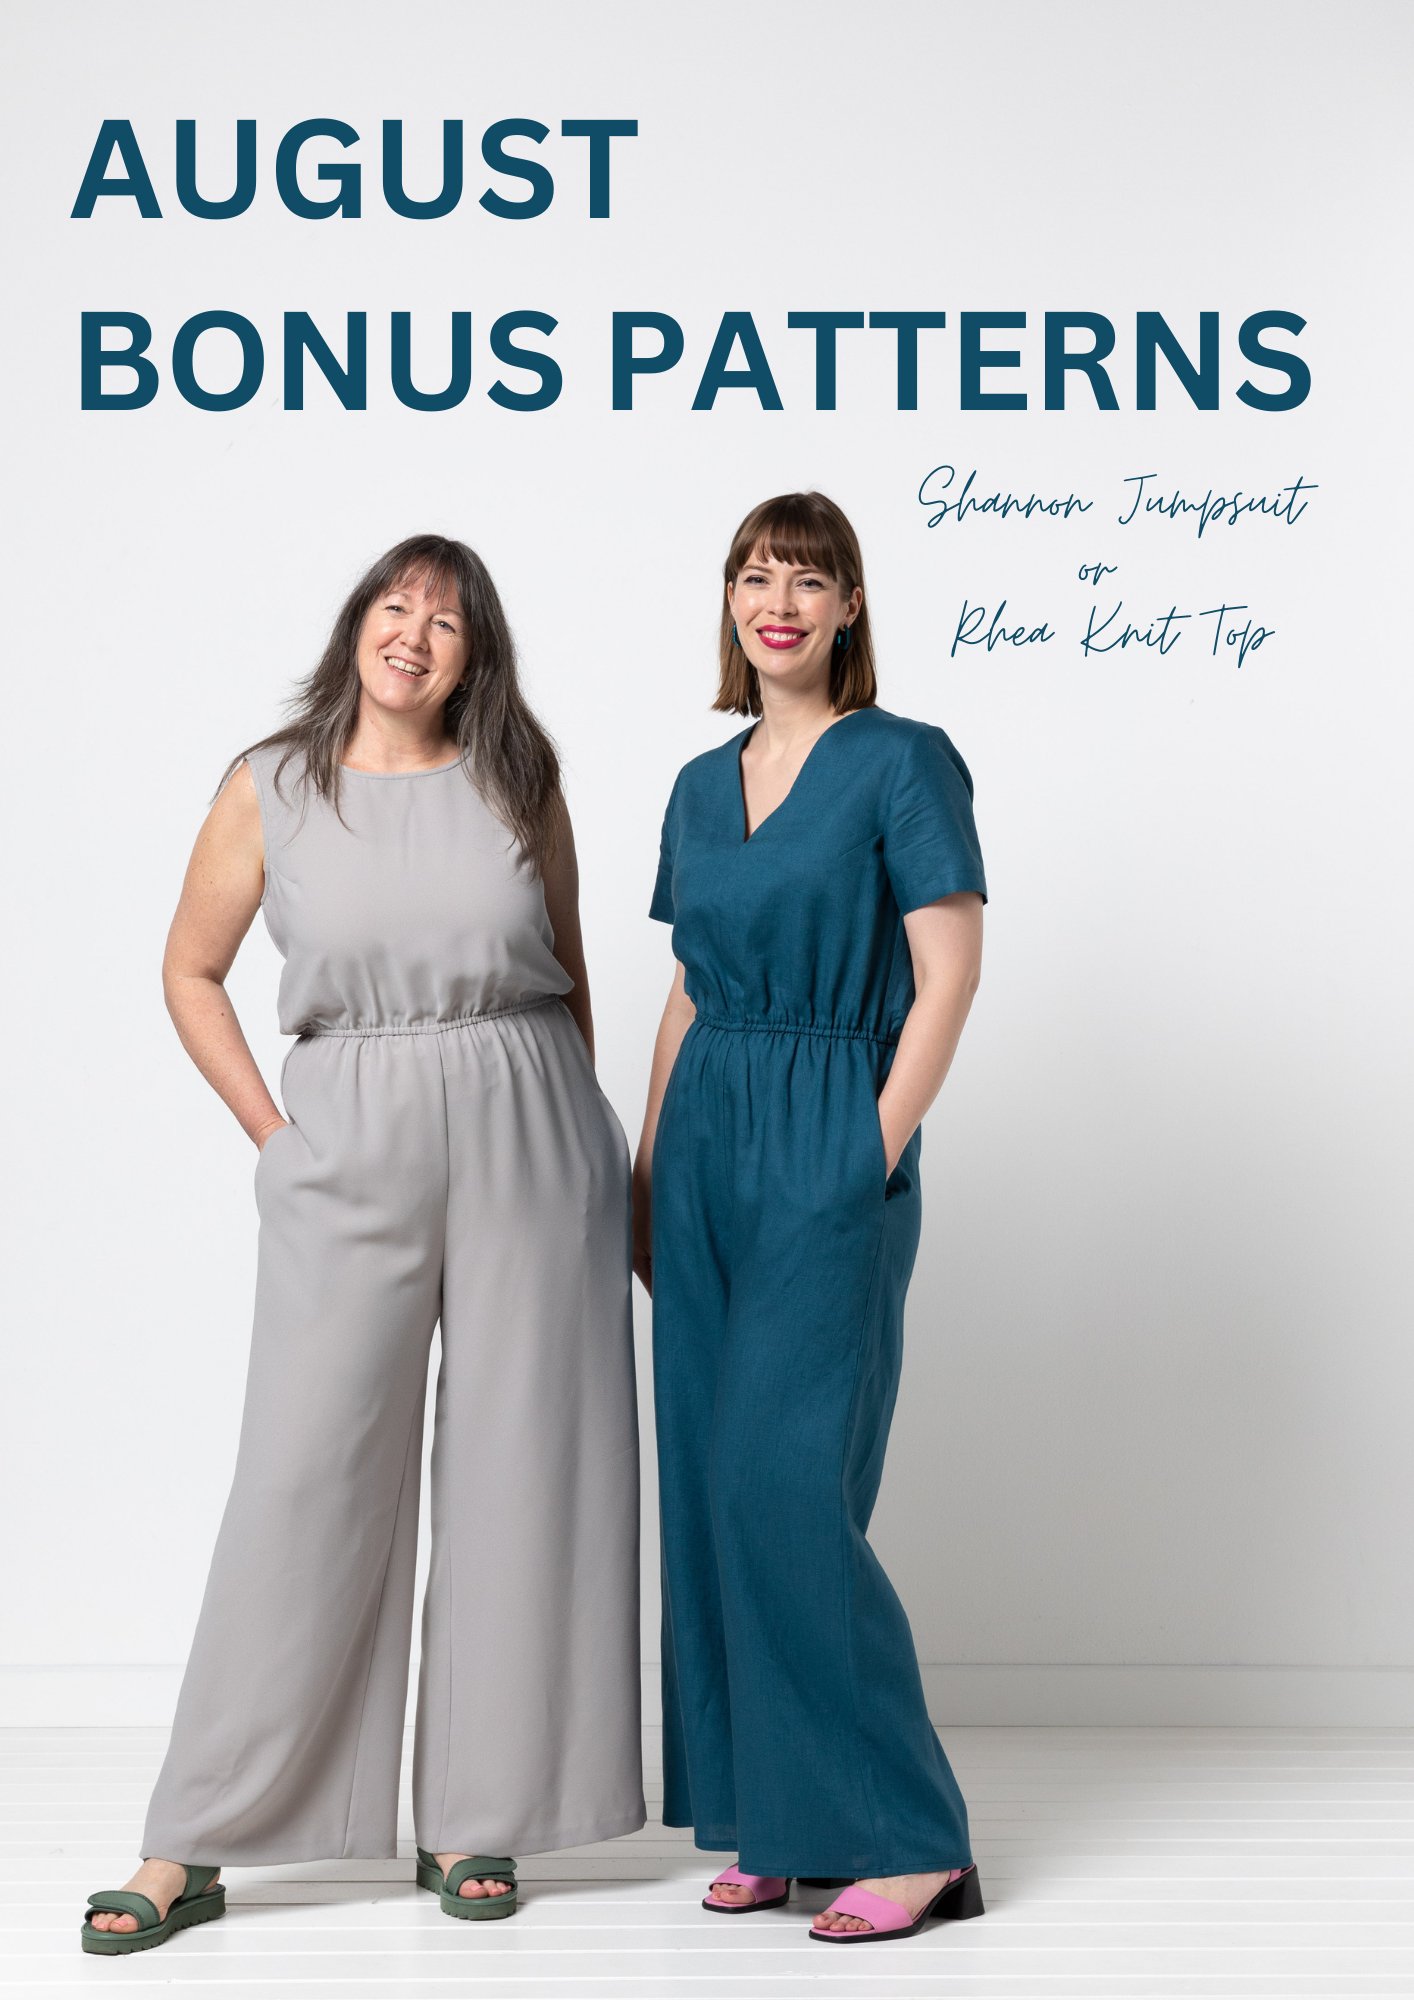 NEW August Bonus Patterns - Shannon Jumpsuit or Rhea Knit Top!